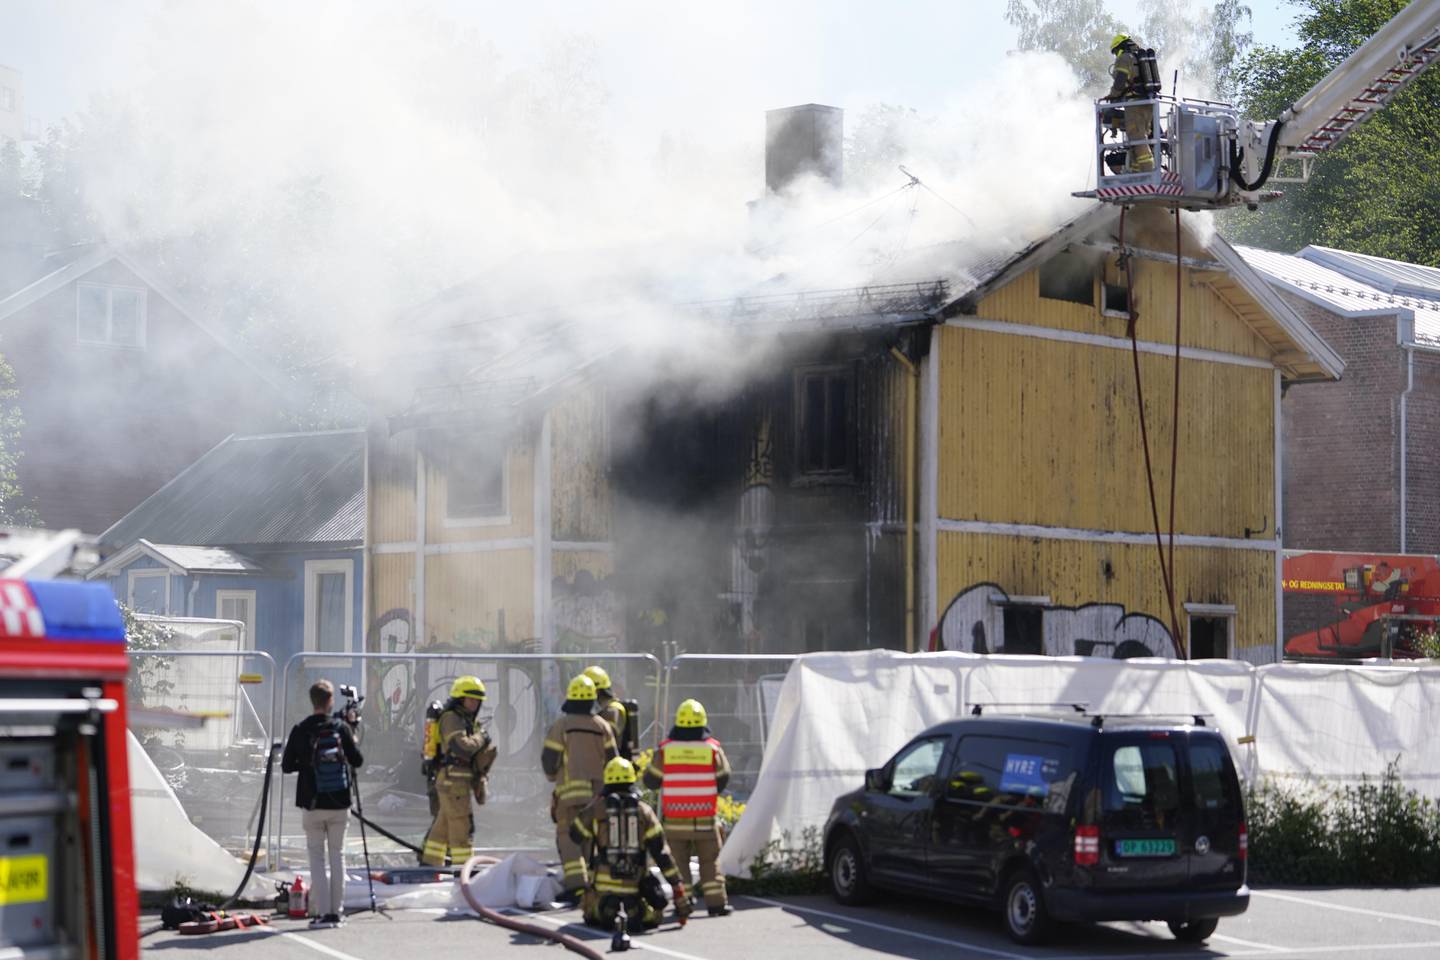 Oslo  20190610.
Det brenner kraftig i en enebolig på Carl Berner i Oslo.
Foto: Fredrik Hagen / NTB scanpix